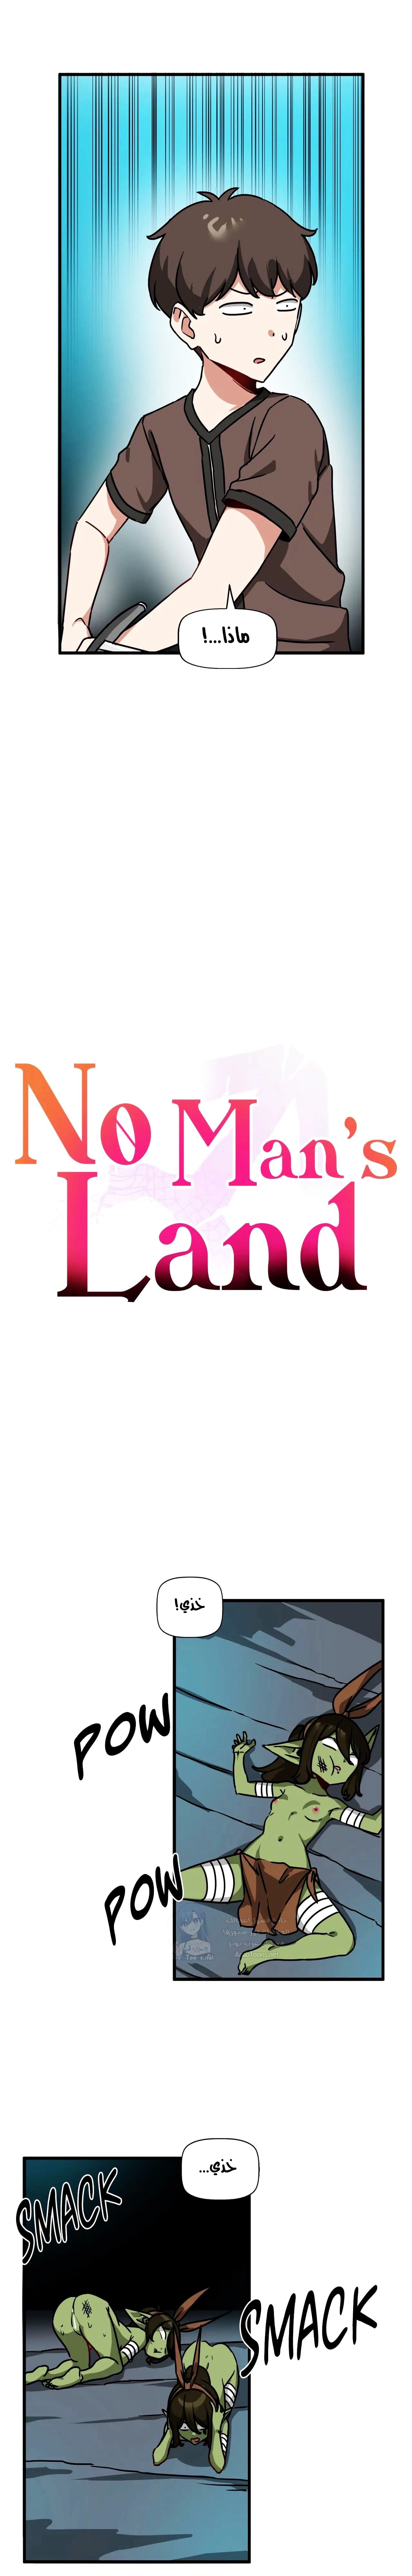 No Man’s Land - 17 - 6532b3a9f2870.webp